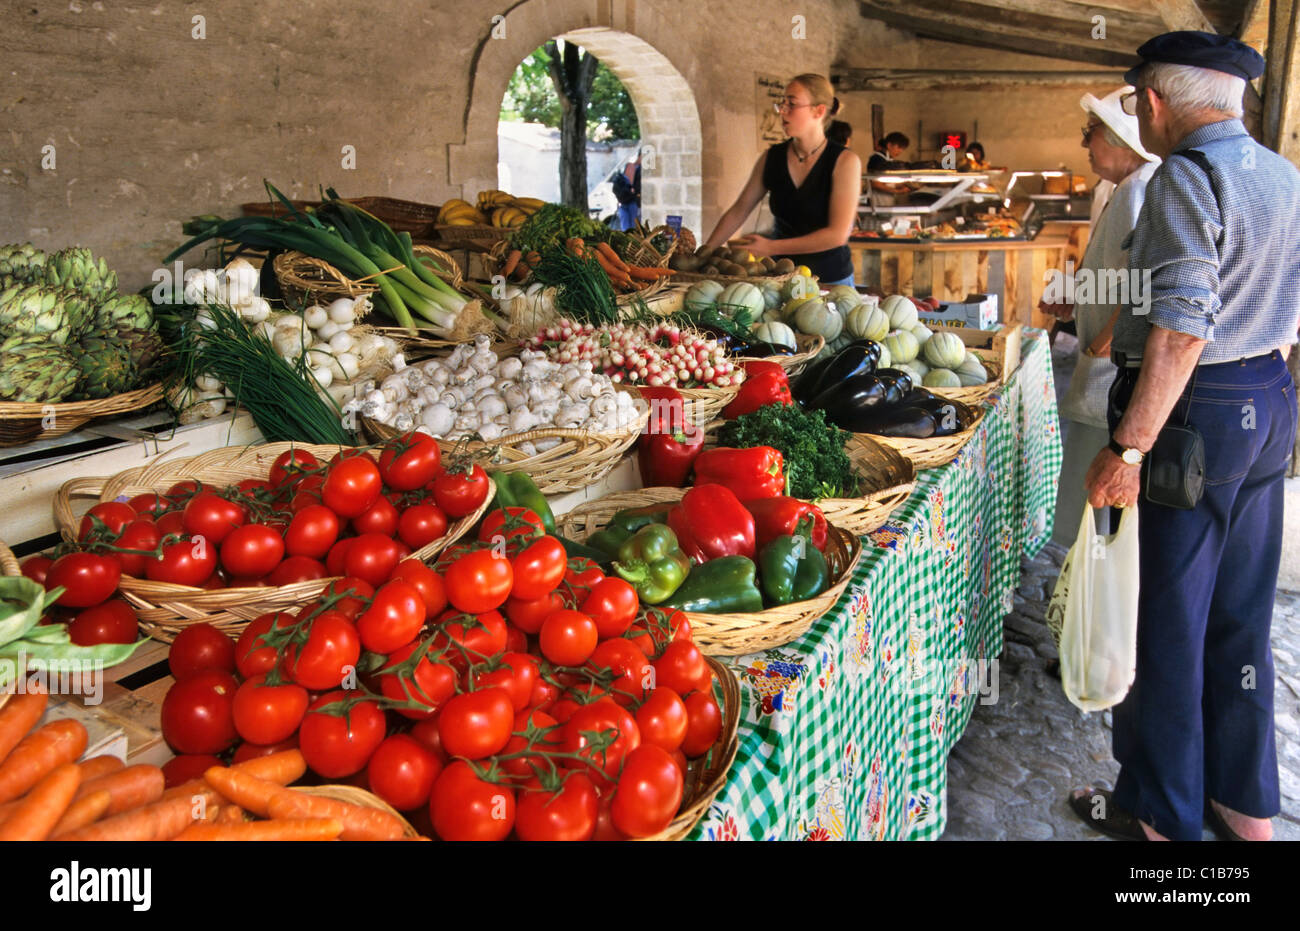 Elderly people buying food at vegetables market at La Flotte, Ile de Ré / Isle of Rhé, Charente-Maritime, France Stock Photo